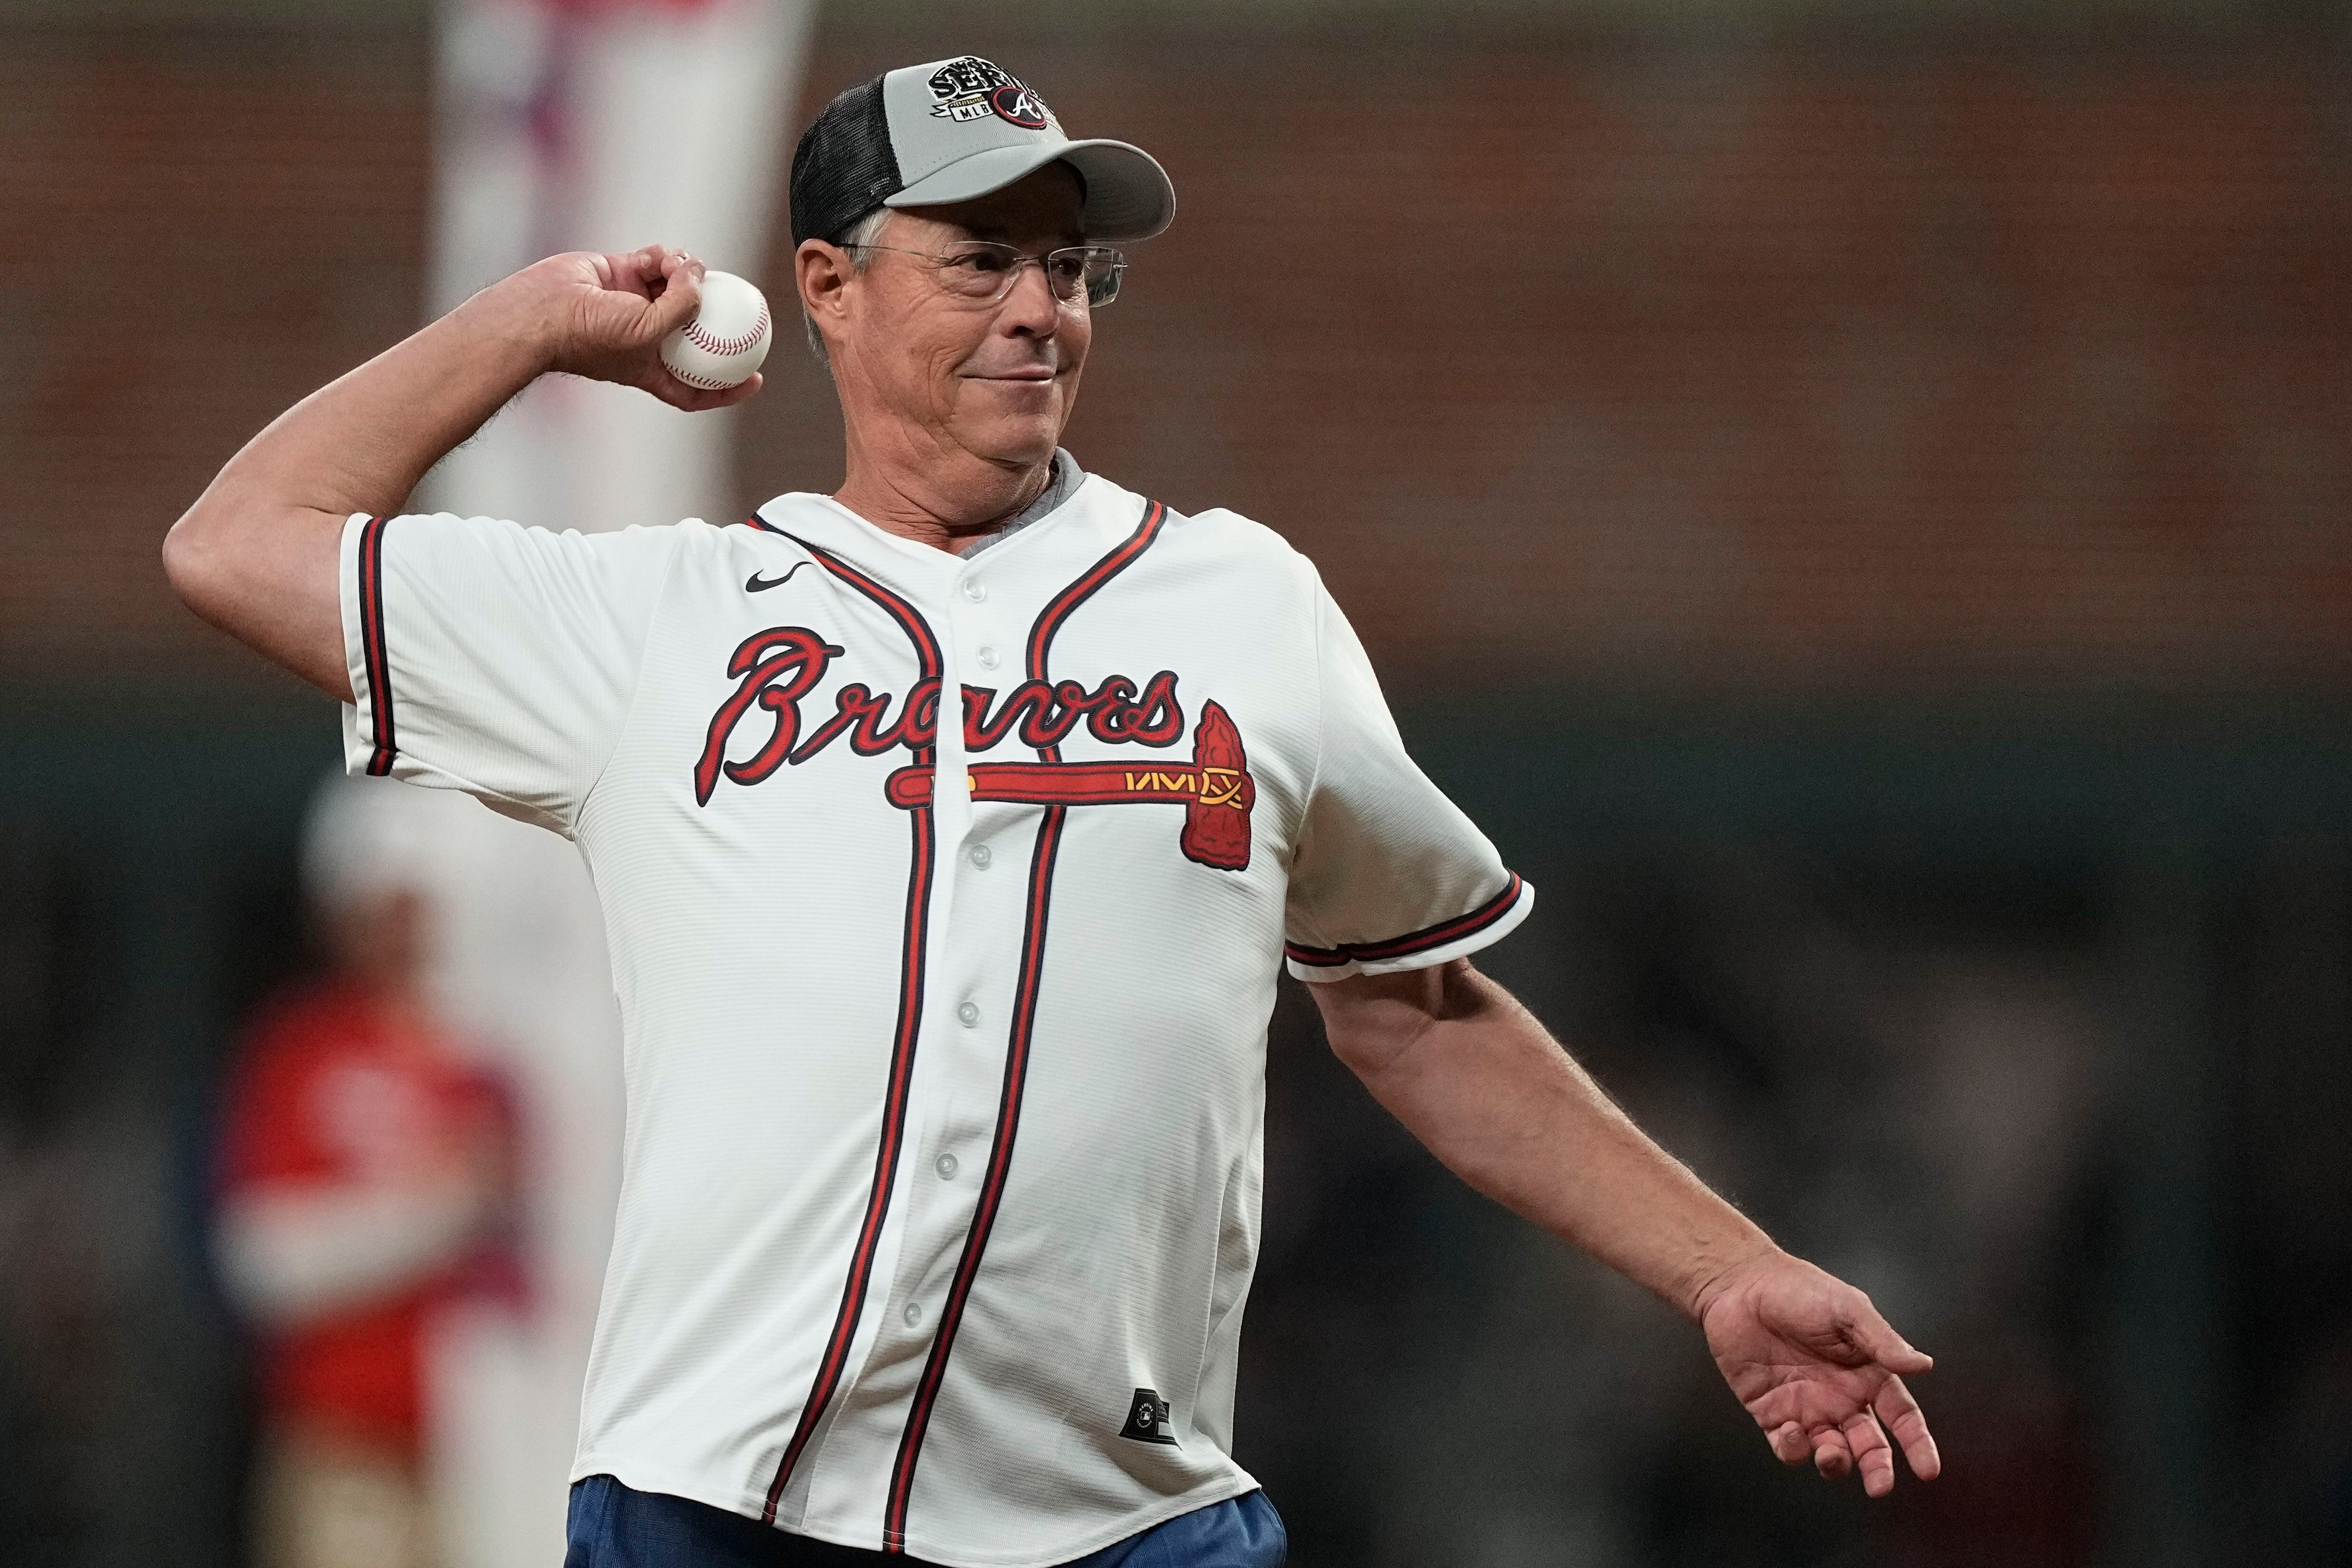 World Series MVP Jorge Soler dons new uniform, but Braves fans